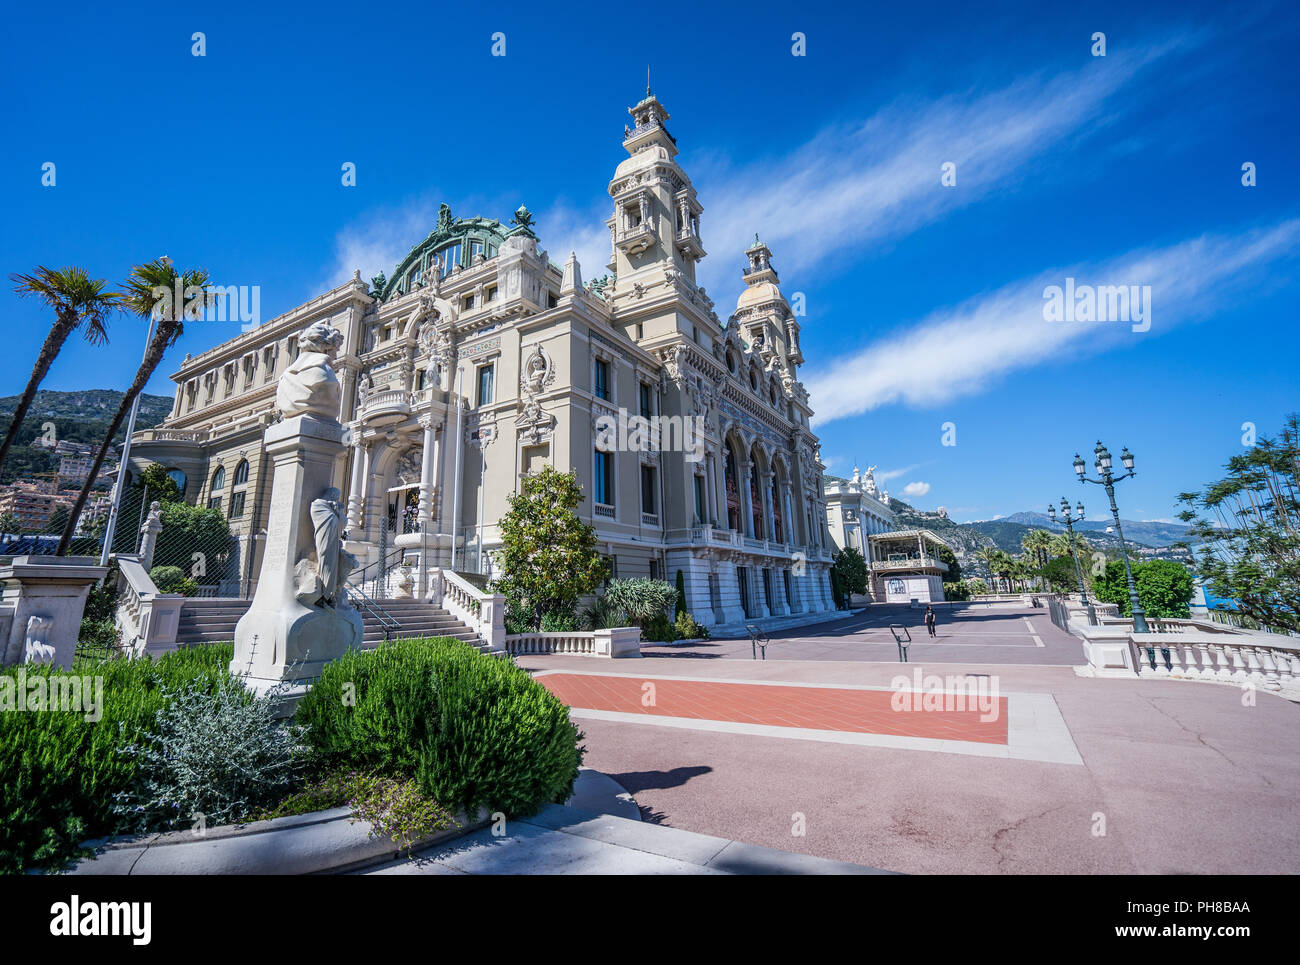 Monte Carlo Casino is a gambling and entertainment complex located in Monaco. It includes a casino, the Grand Théâtre de Monte Carlo, and the office. Stock Photo